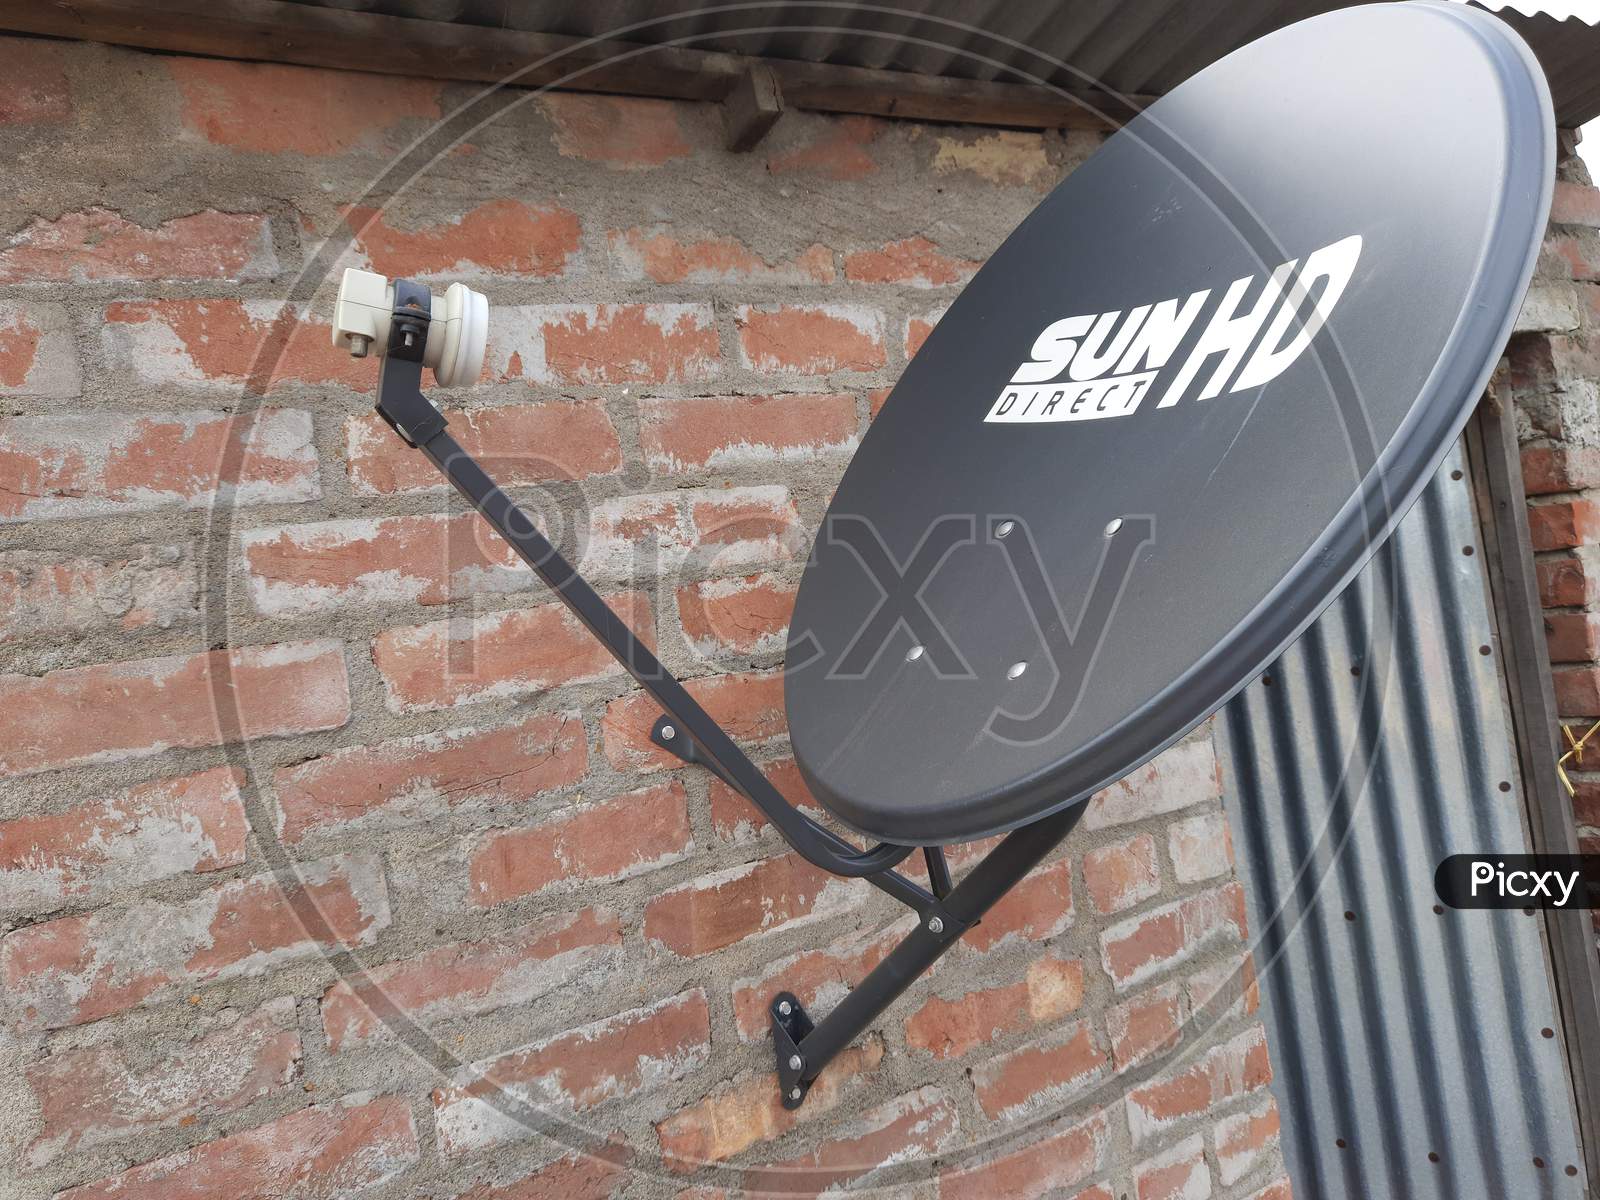 Dish Antenna image in home wall, black antenna image, Background Blur, satellite dishes